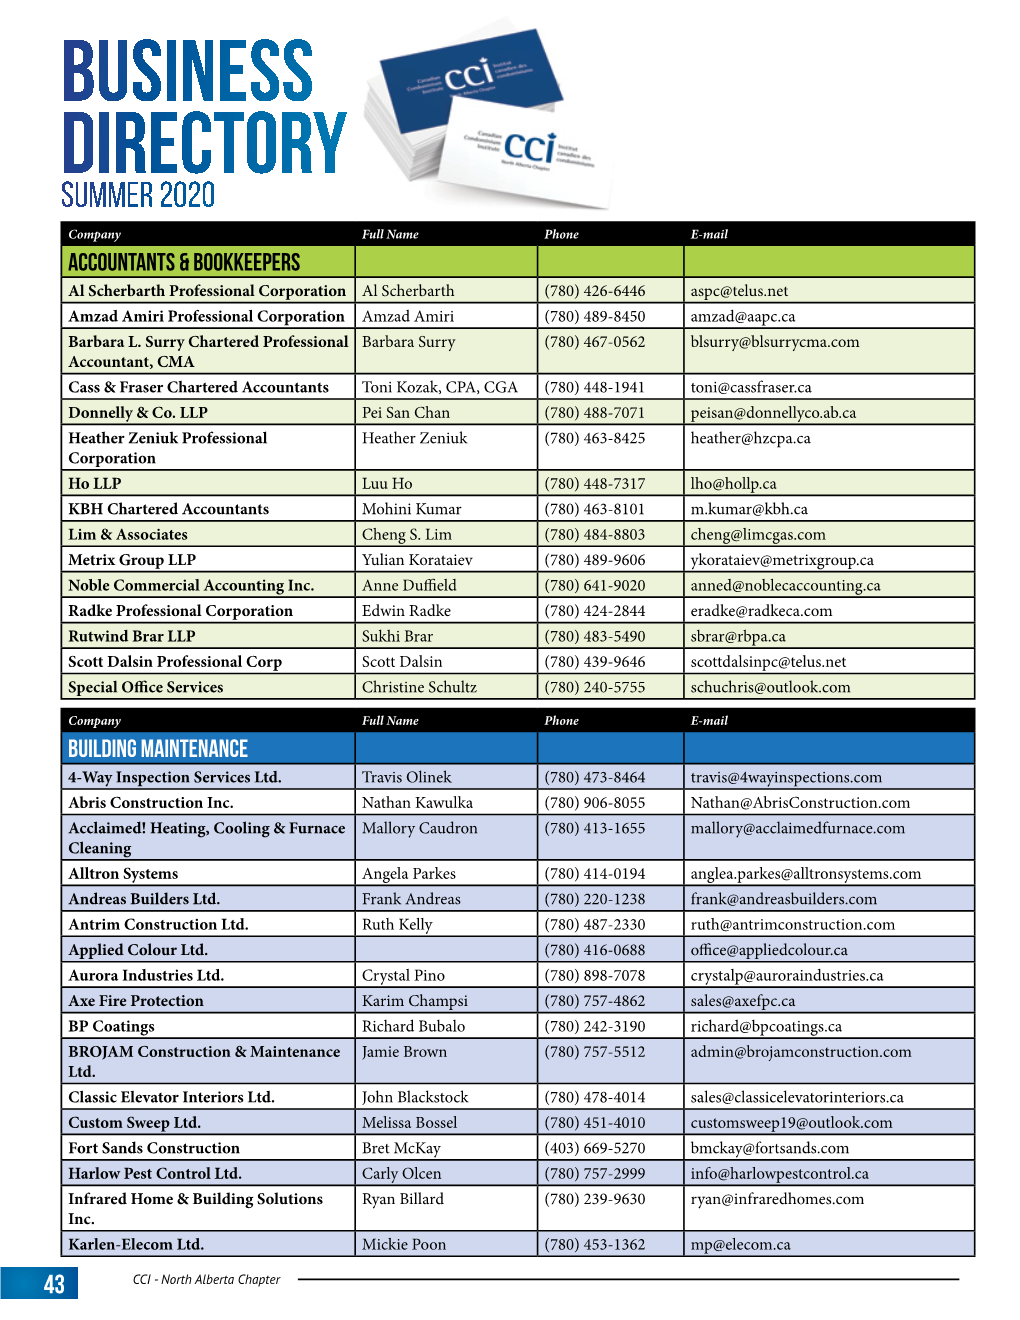 Business Directory Summer 2020